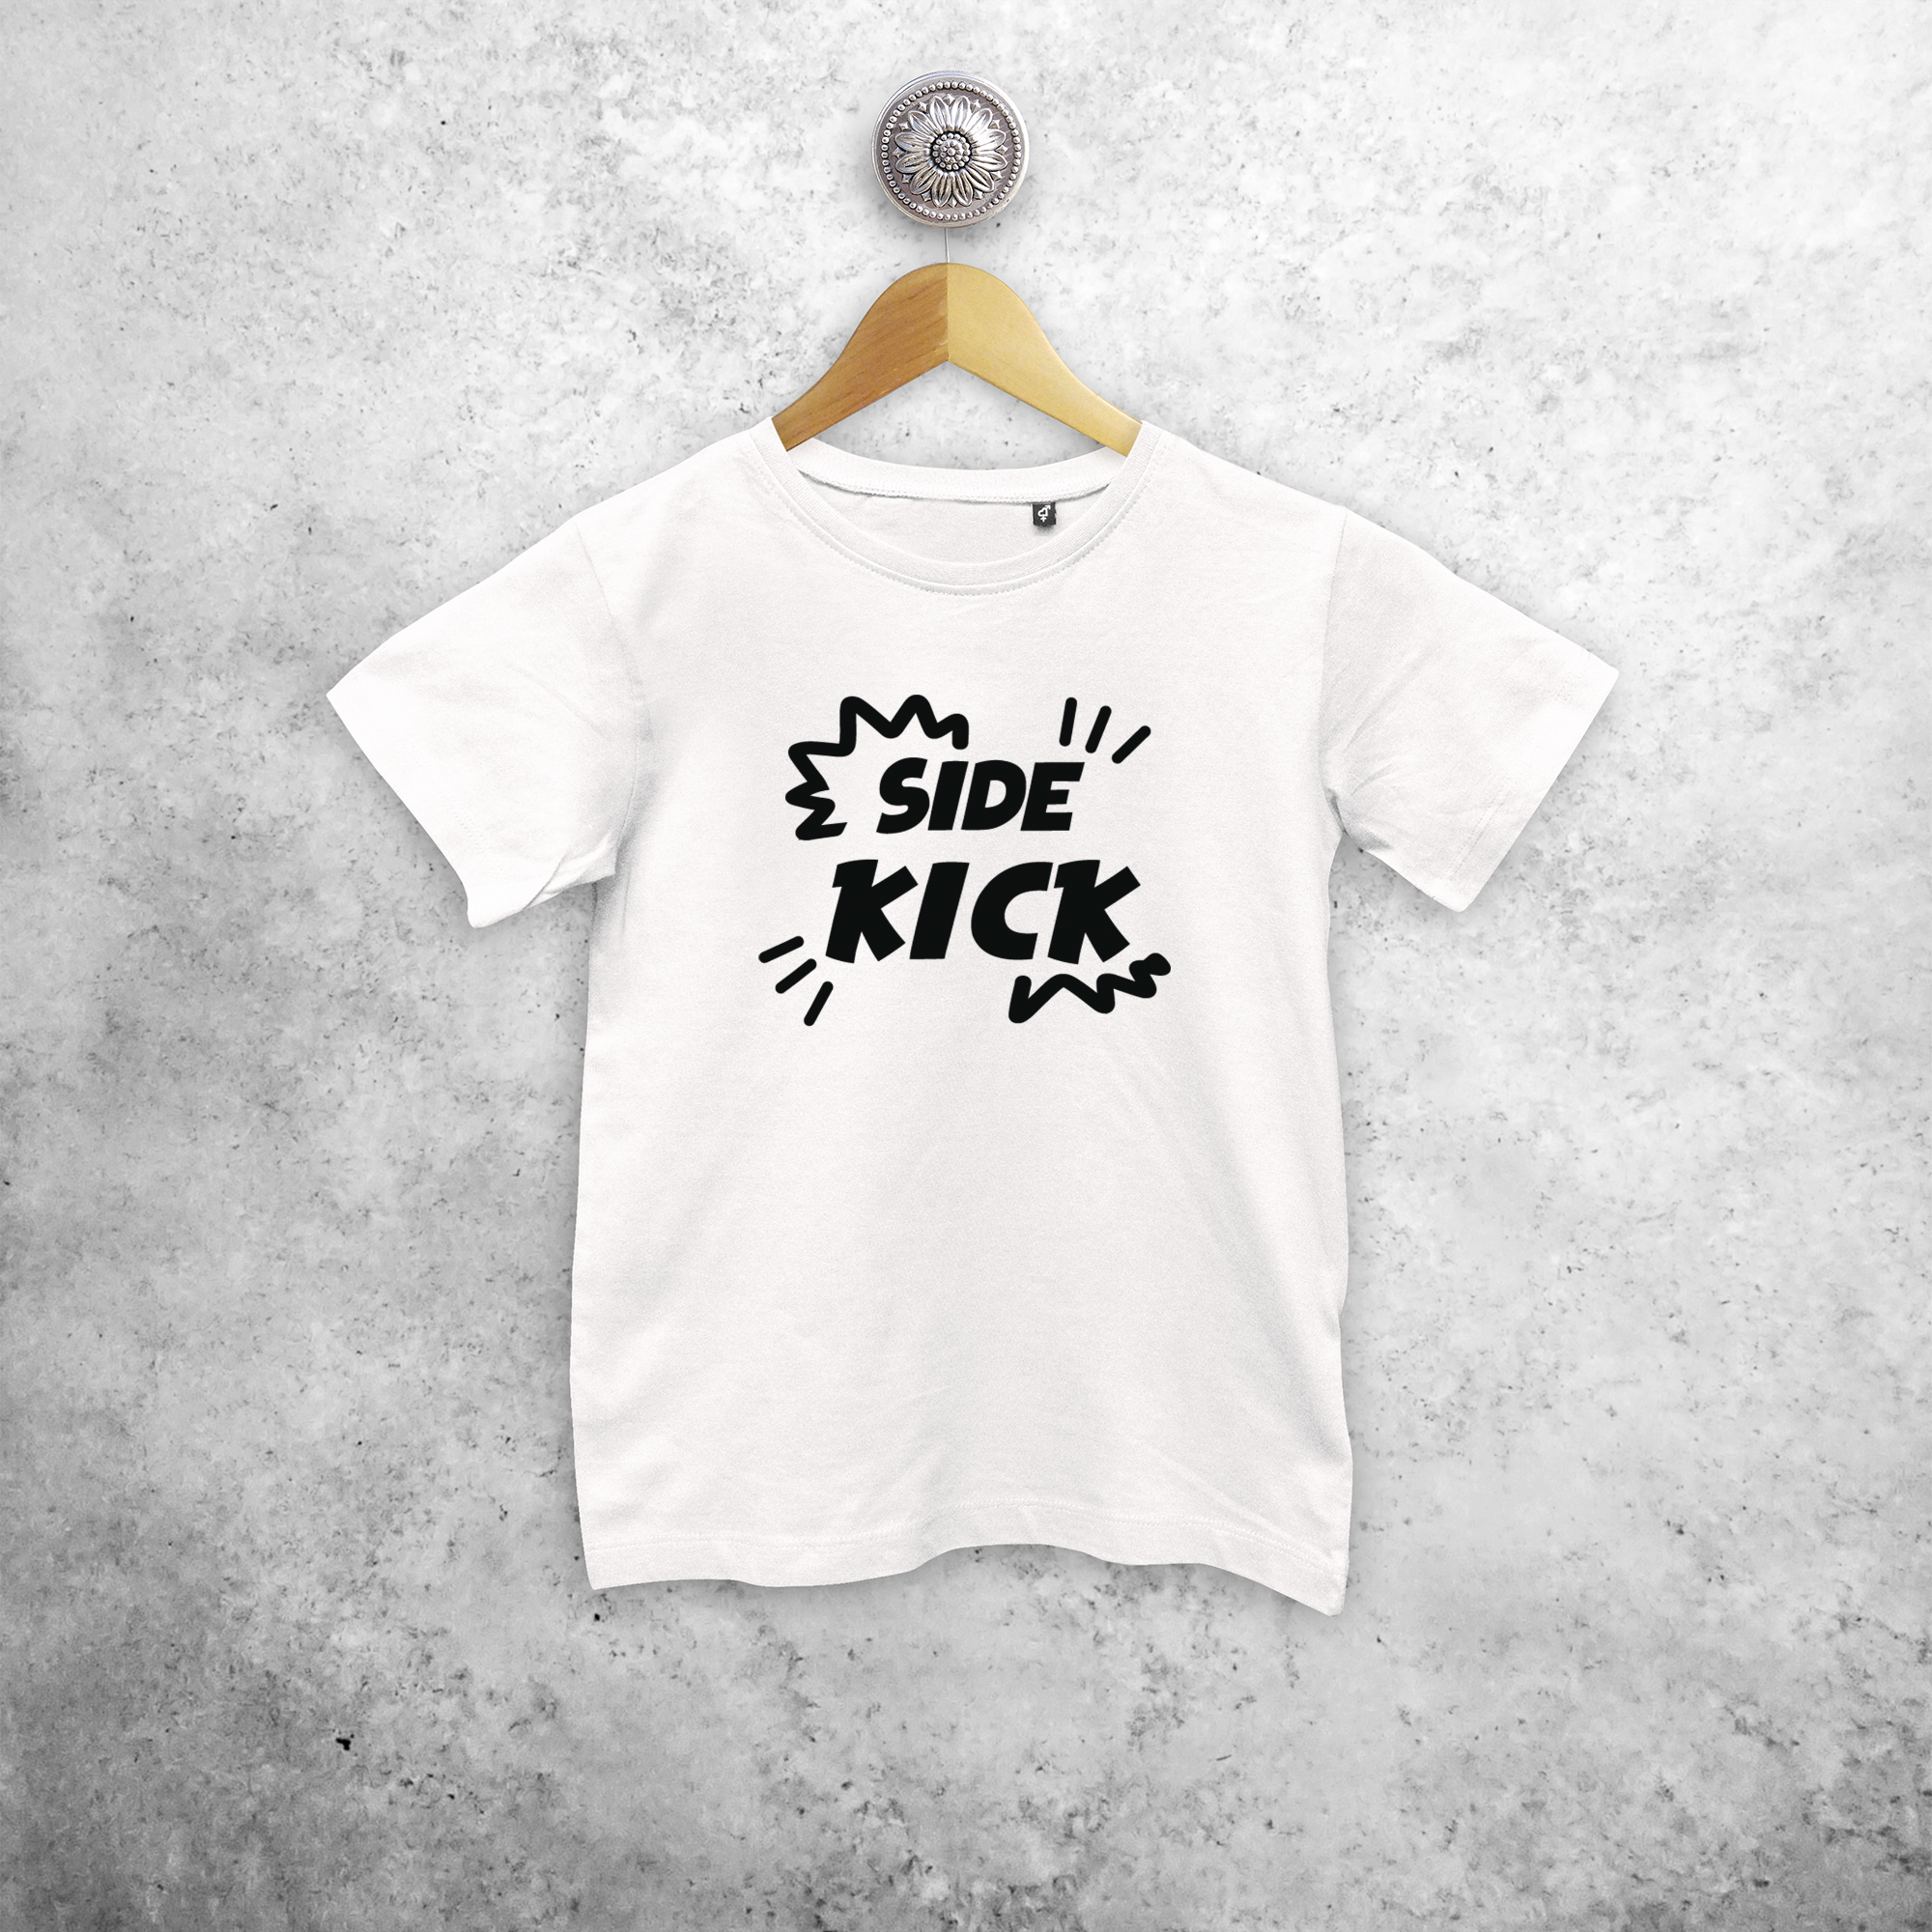 'Side kick' kids shortsleeve shirt